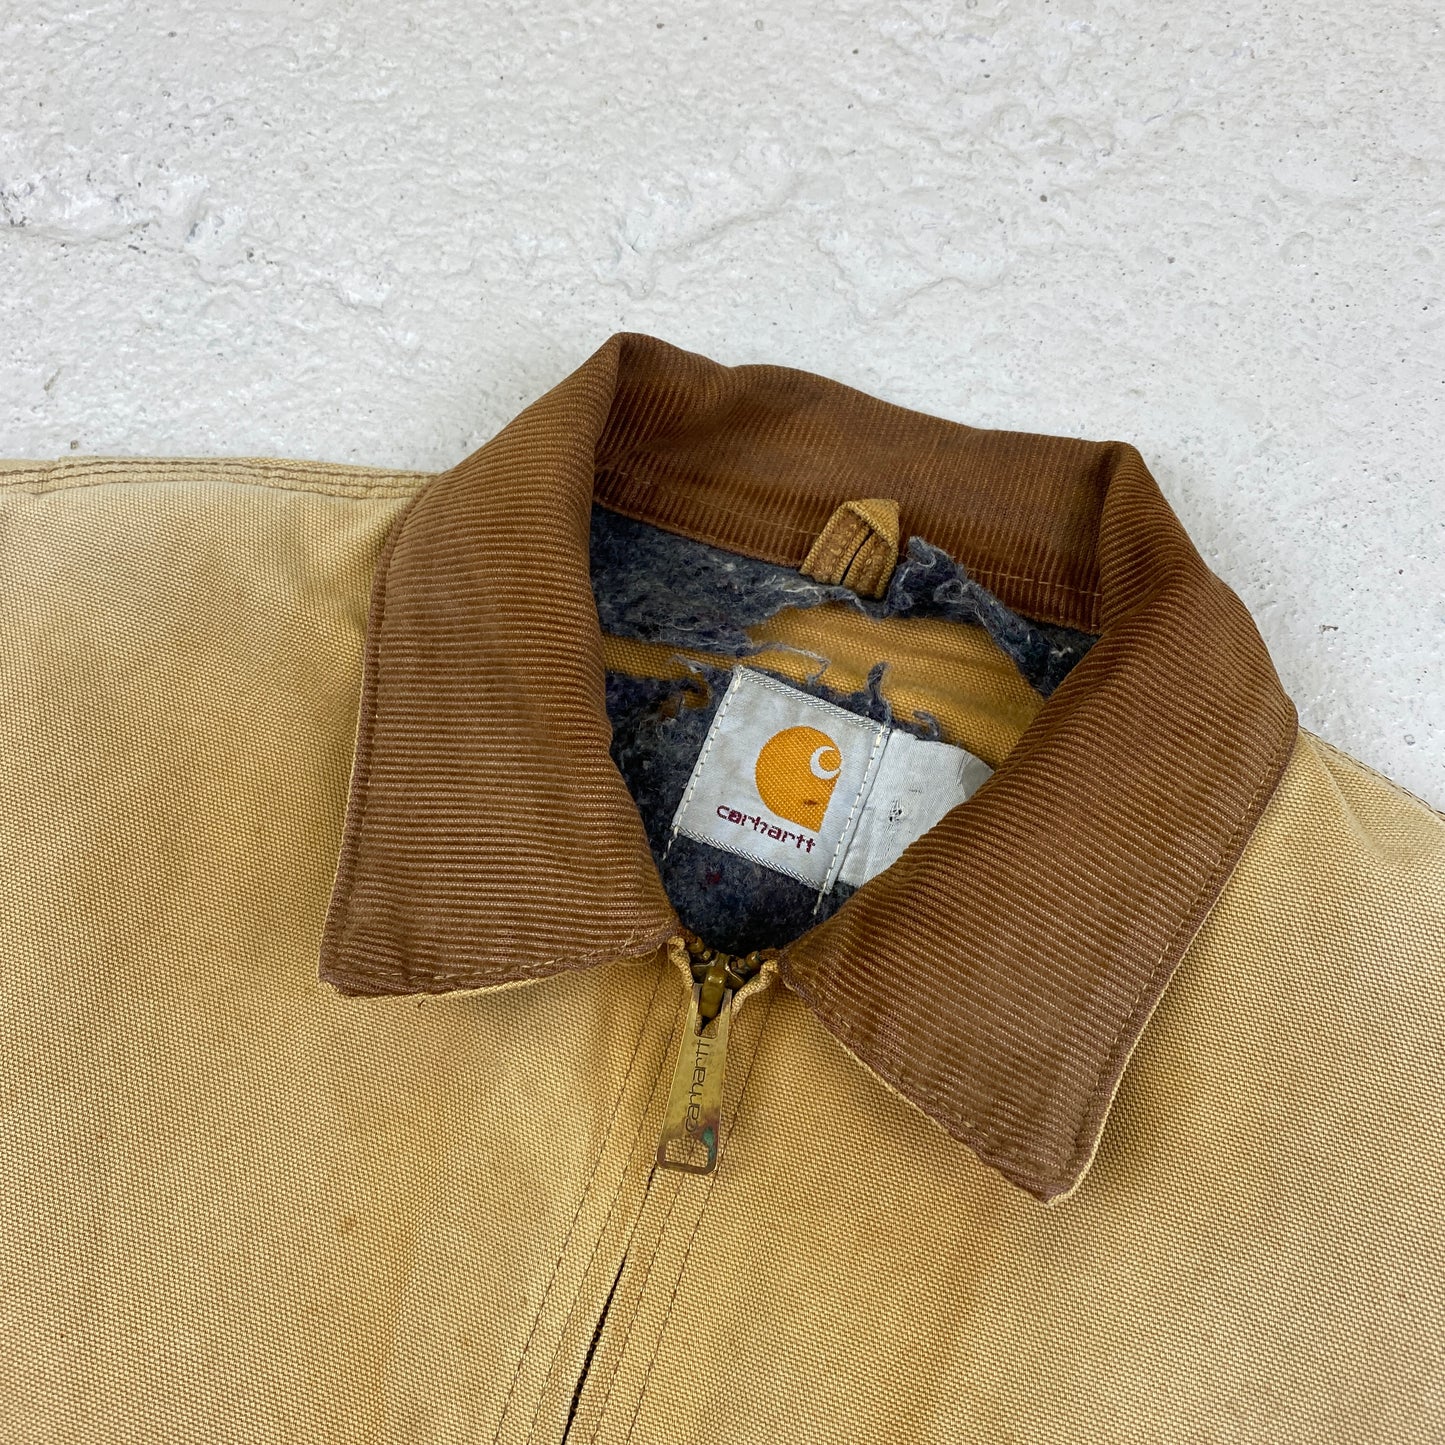 Carhartt RARE distressed detroit jacket (M)